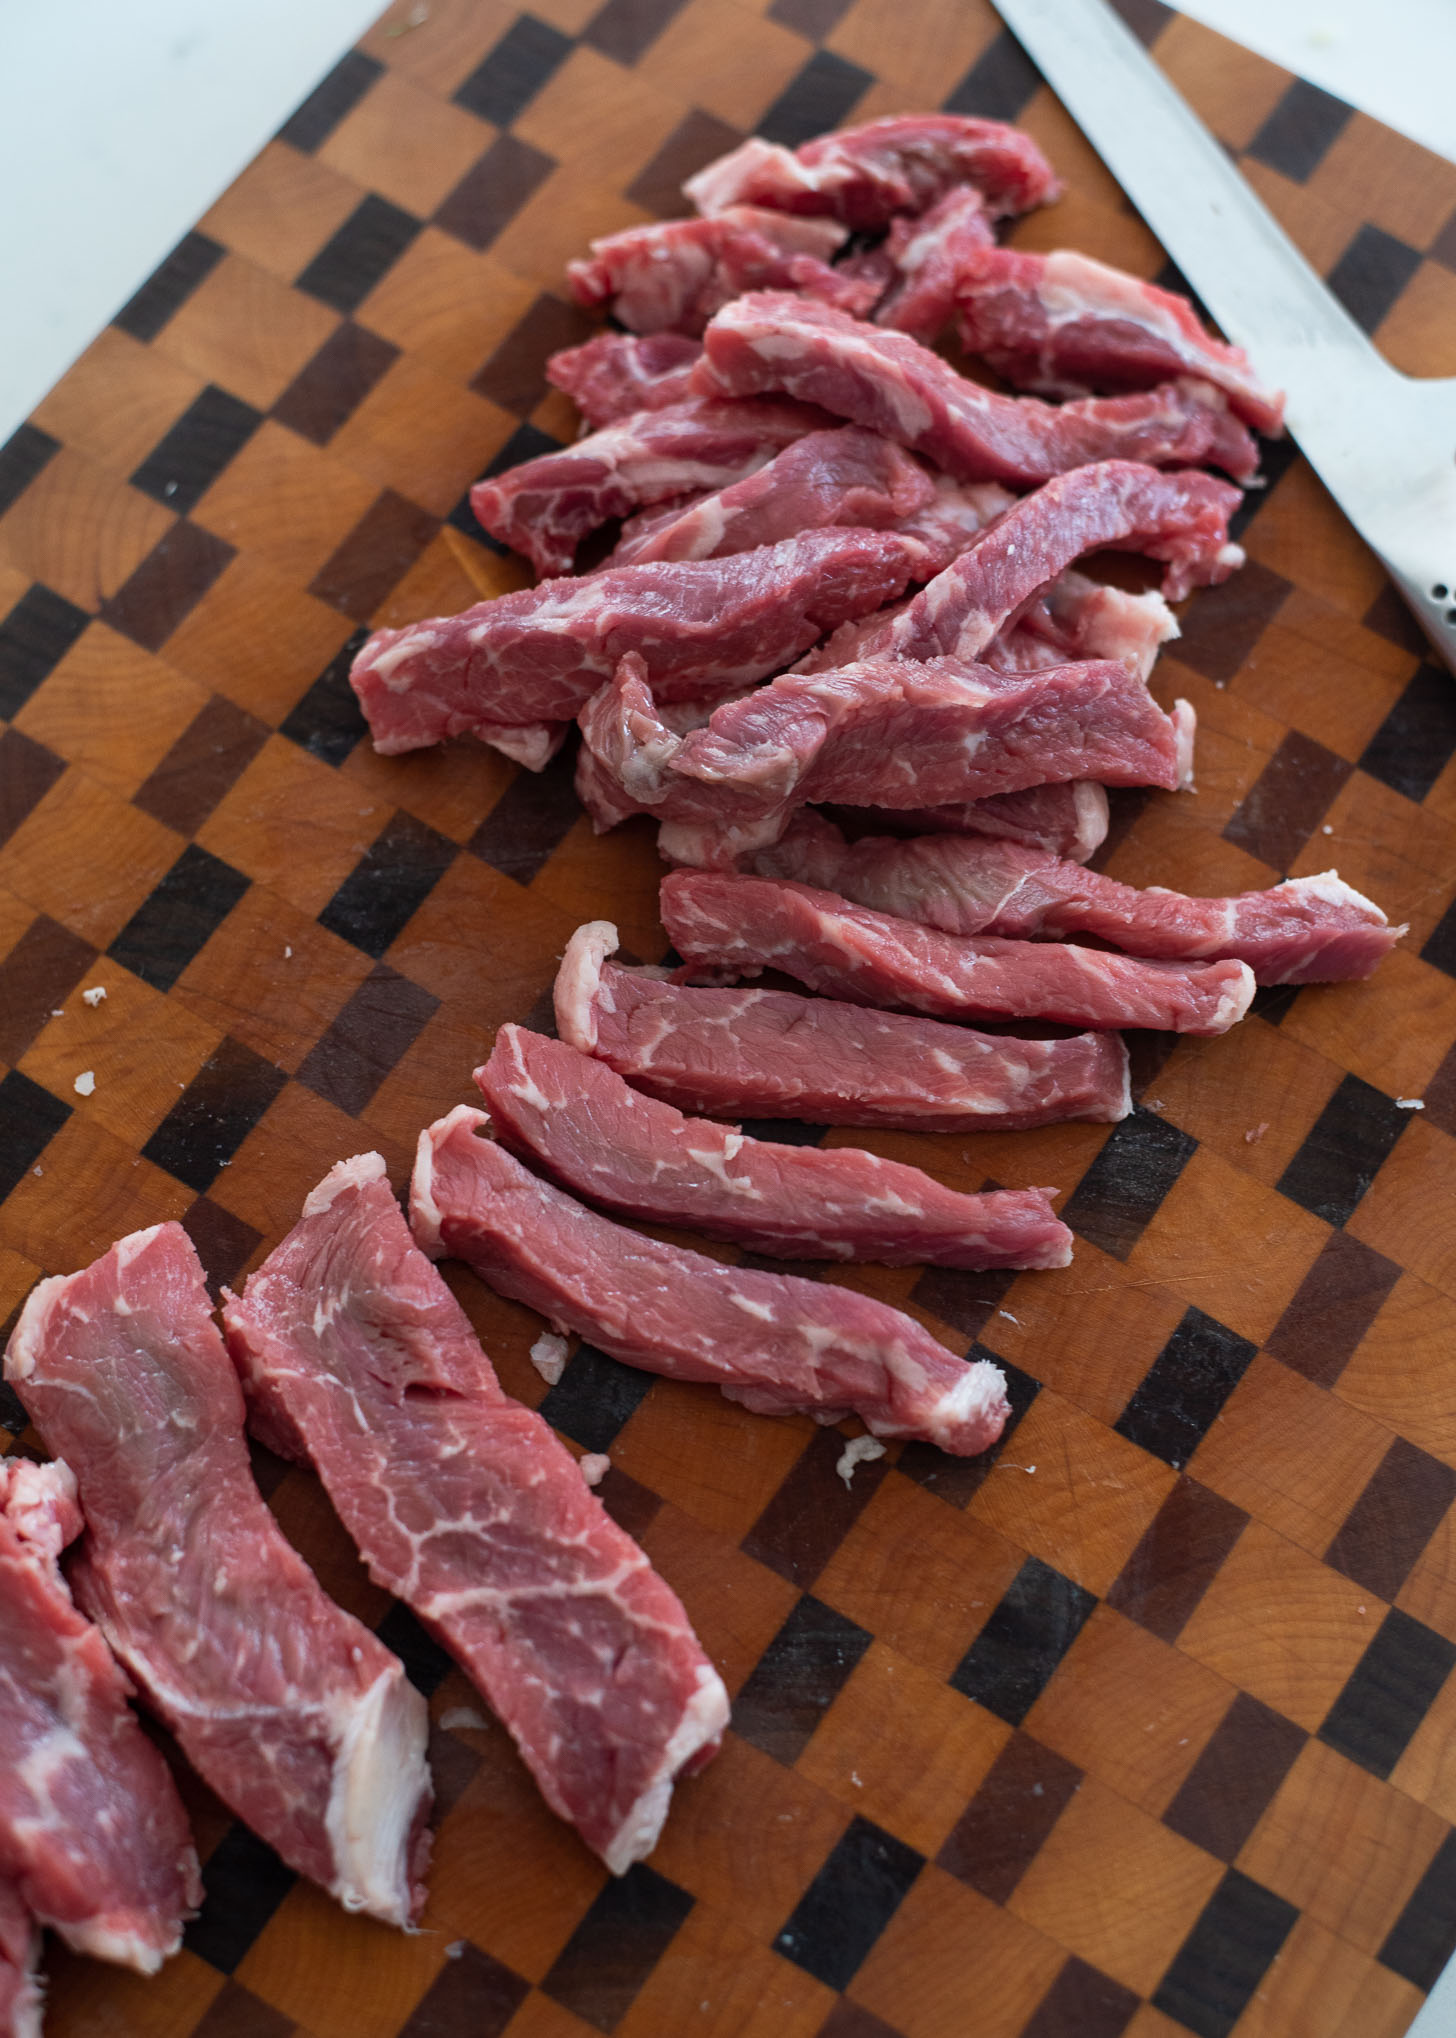 Beef steak is cut into strips to make crispy beef